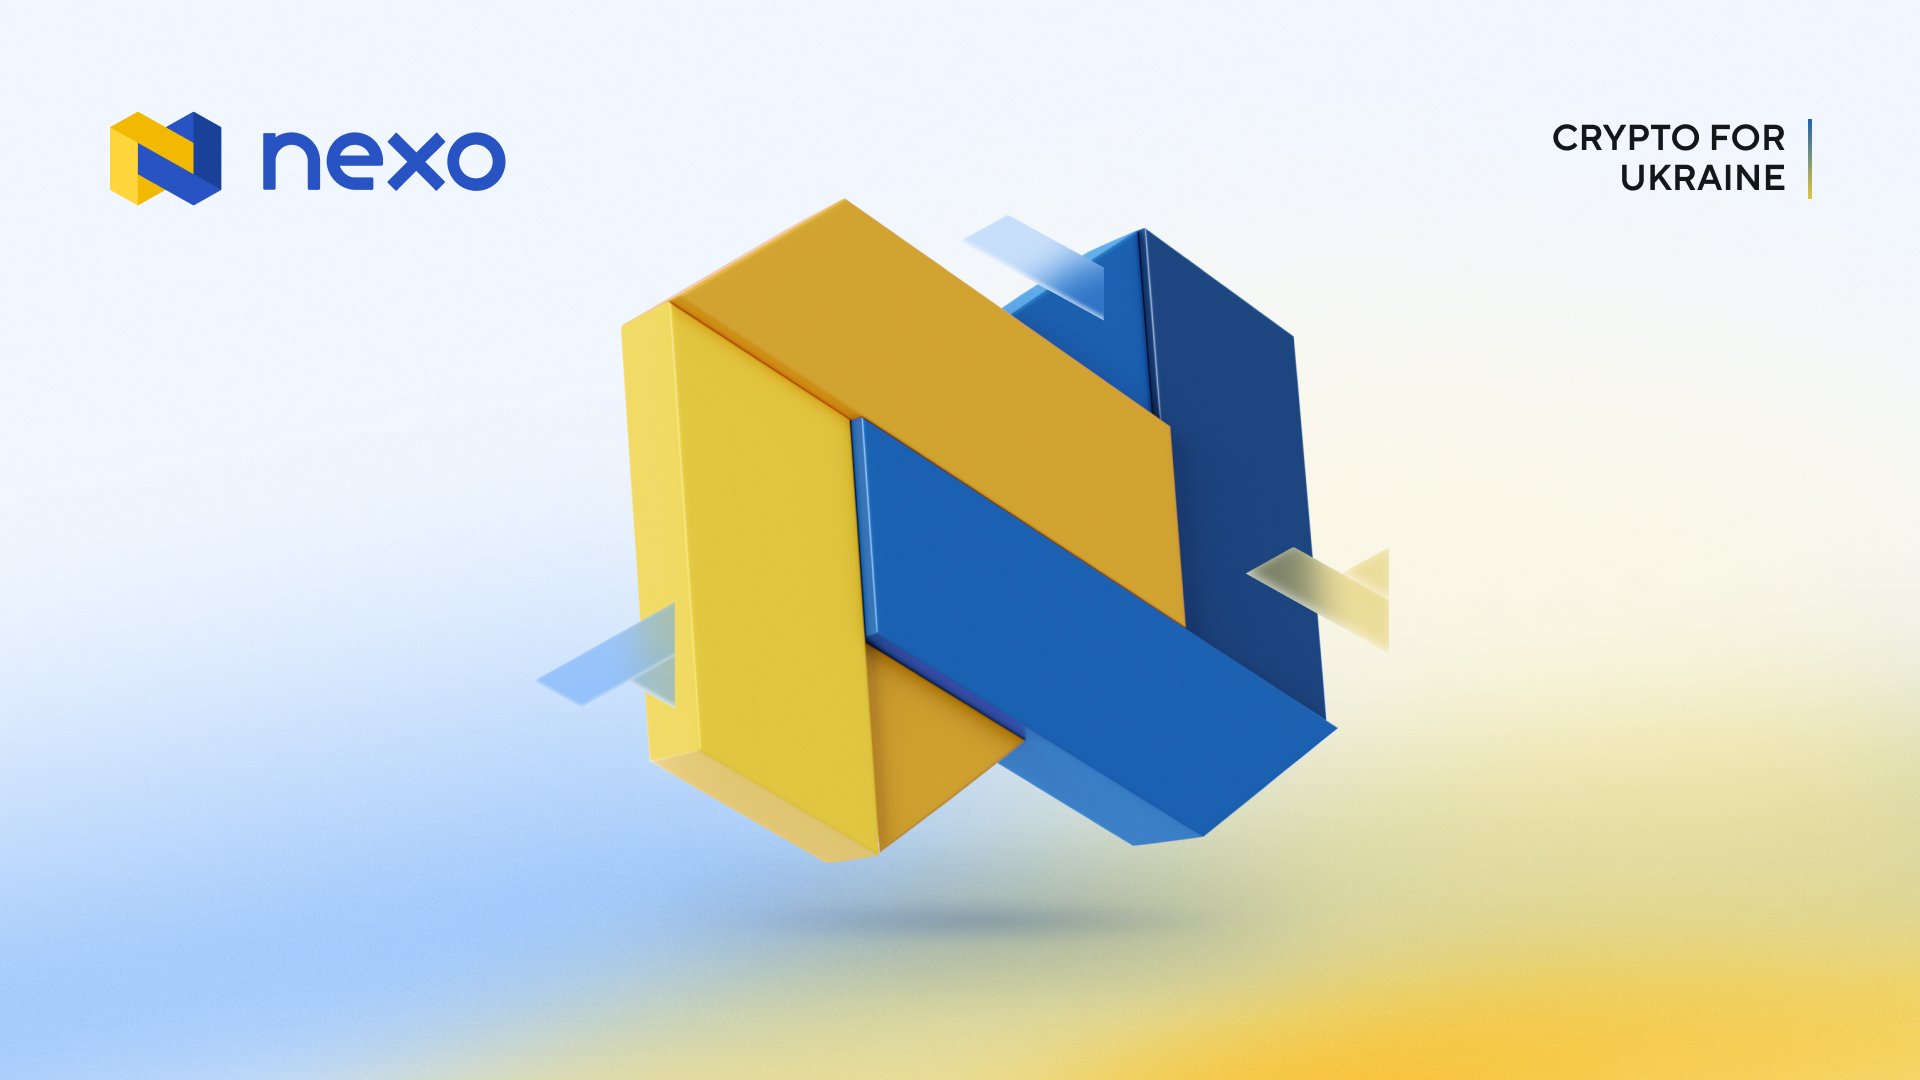 Nexo “Crypto for Ukraine” Impact: Humanitarian Aid & Sustainable Actions